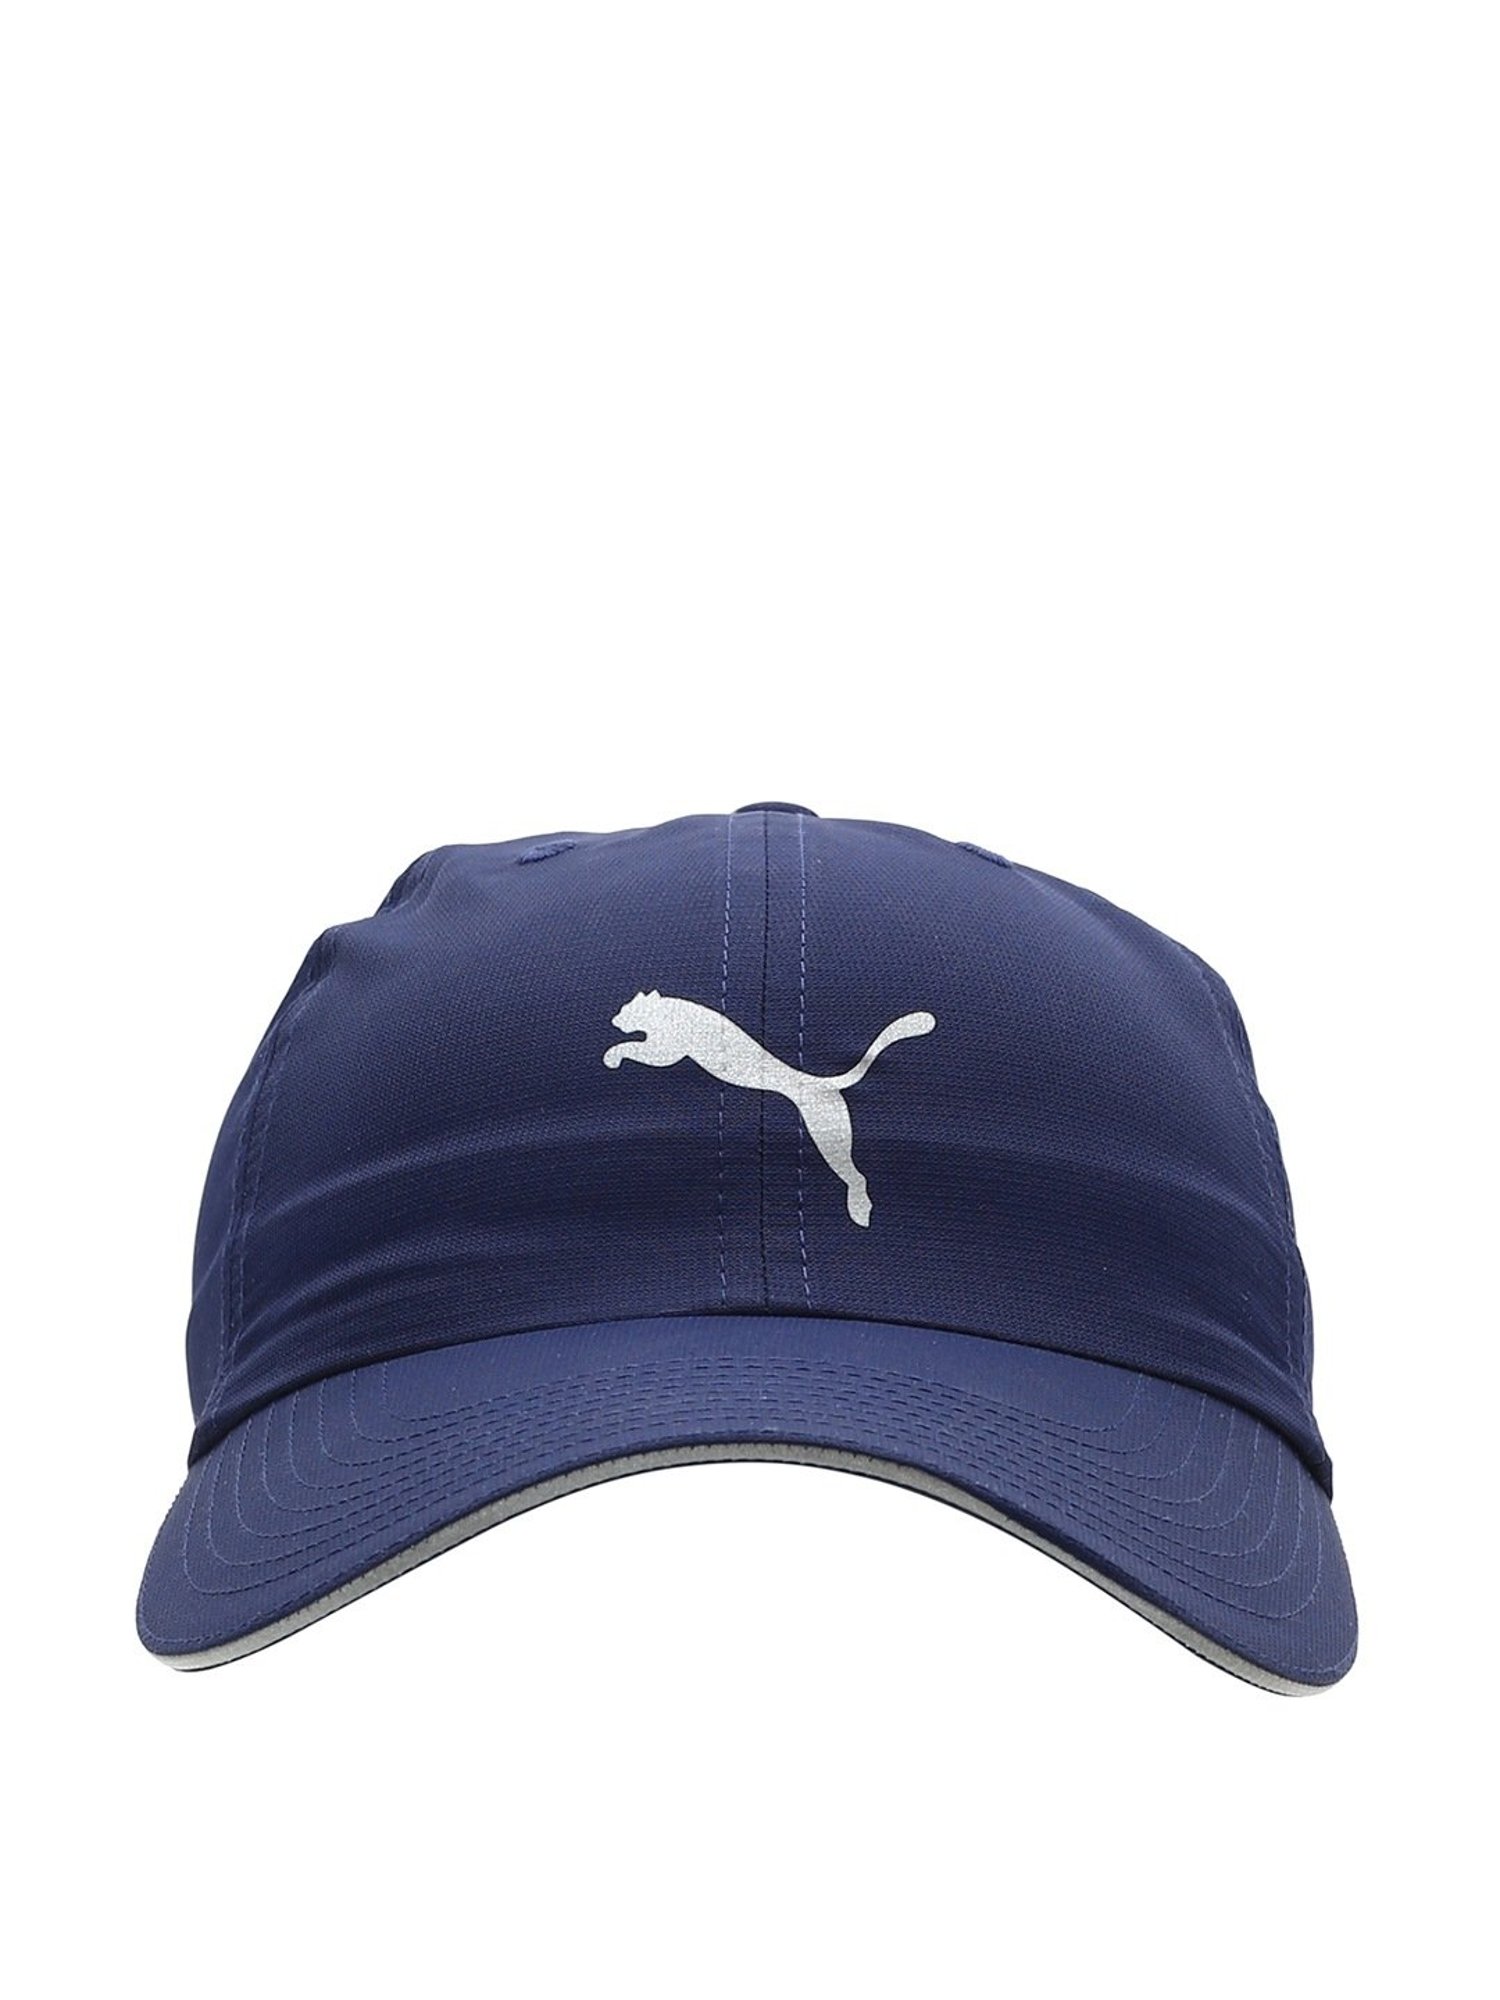 Buy Puma Blue Solid Baseball Cap Online At Best Price @ Tata CLiQ